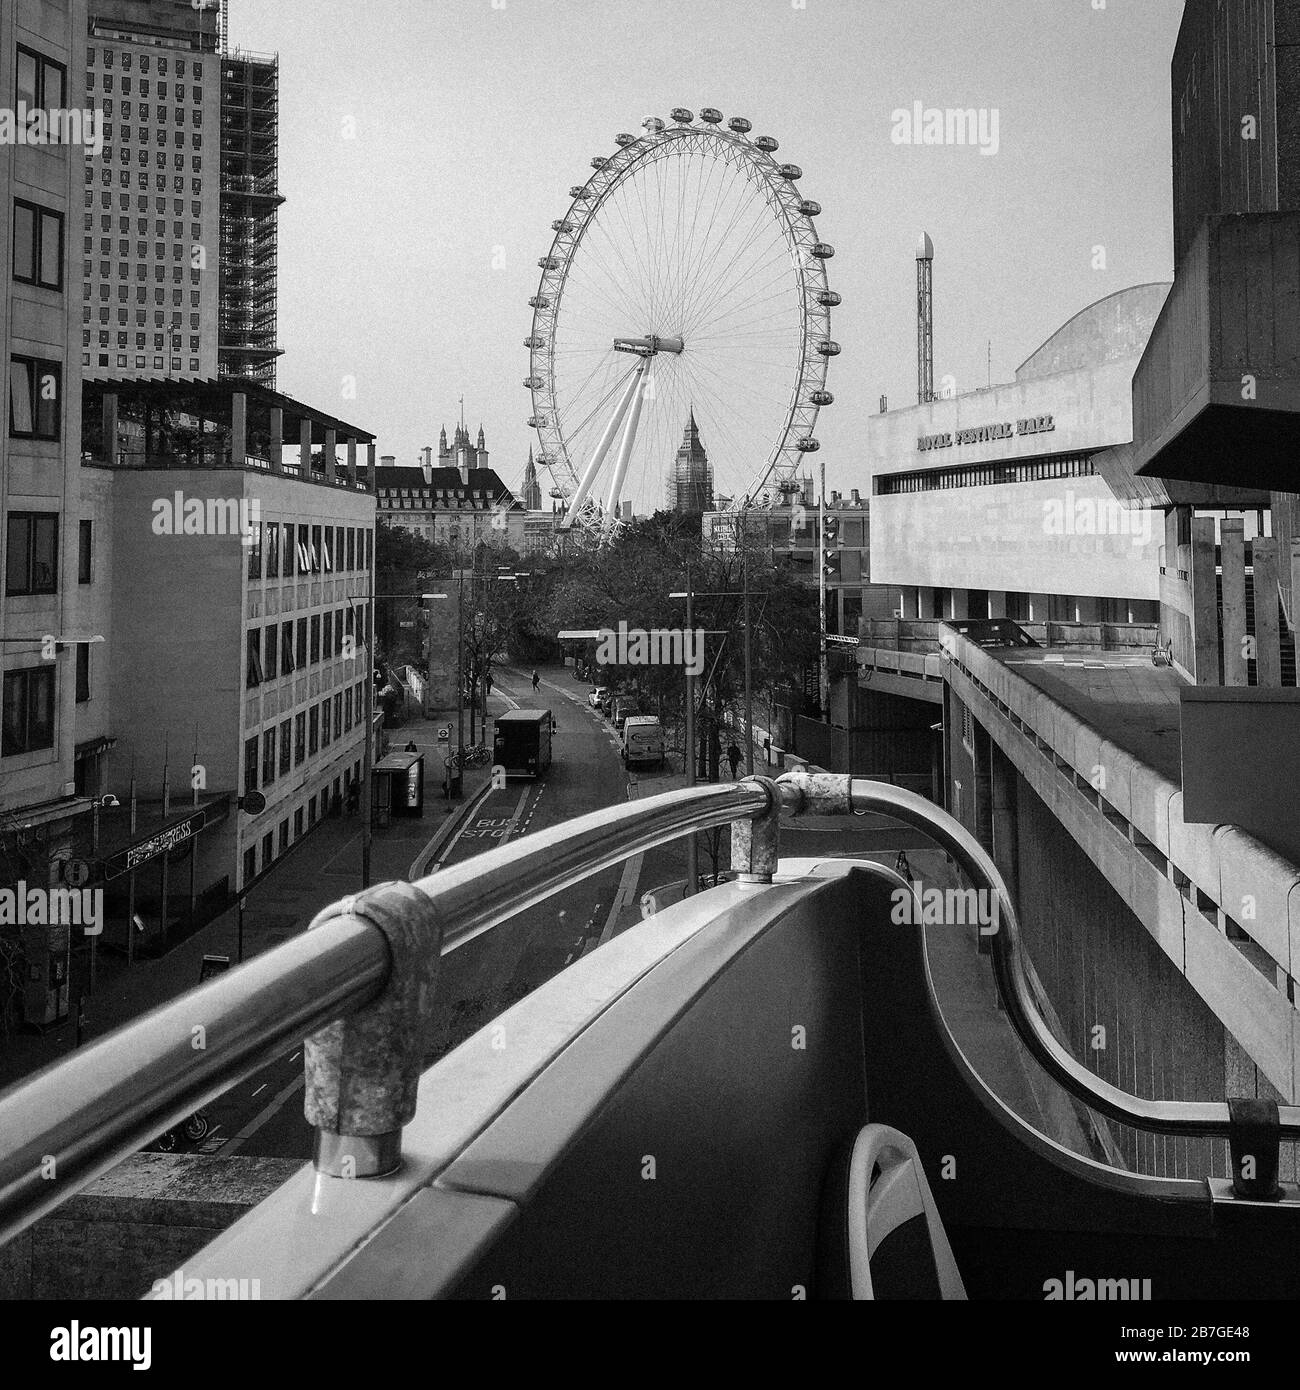 London eye millennium Stock Photo